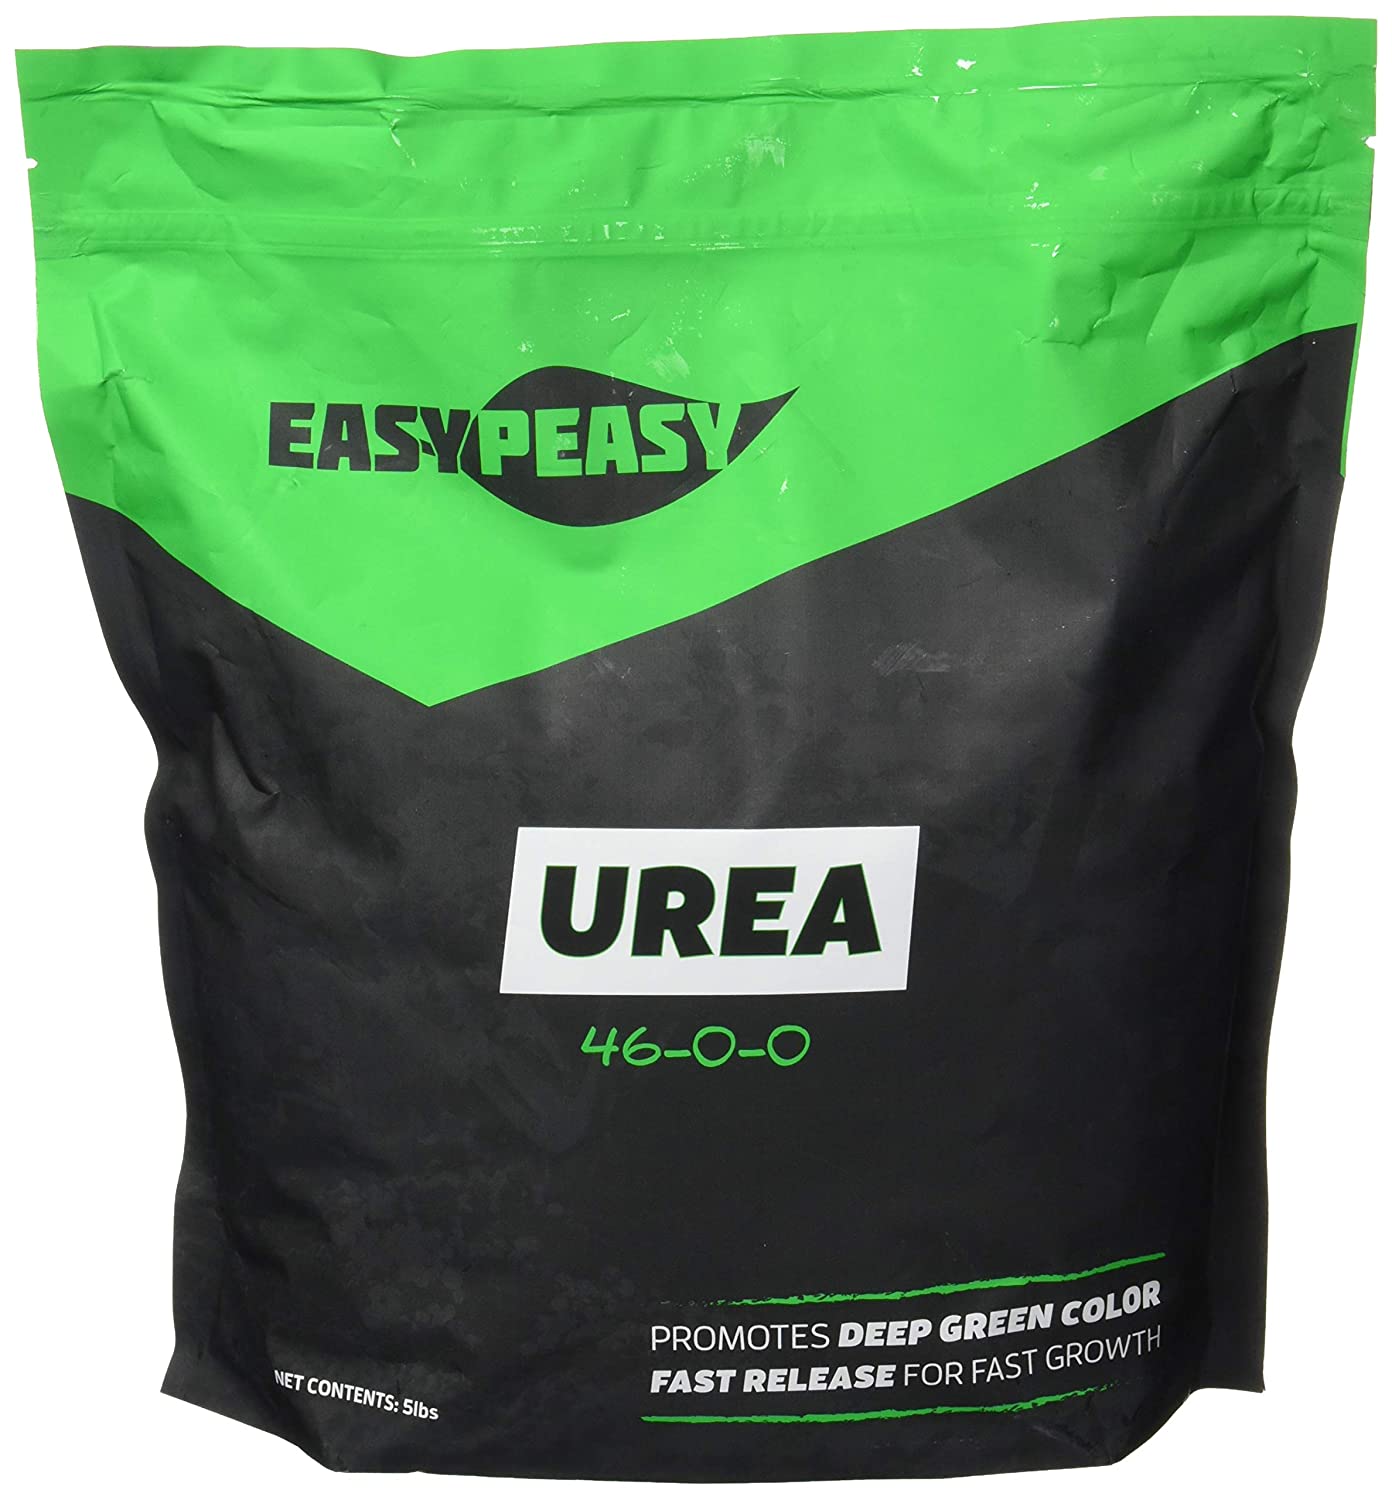 Easy Peasy Urea Fertilizer – 46-0-0 Plant Food